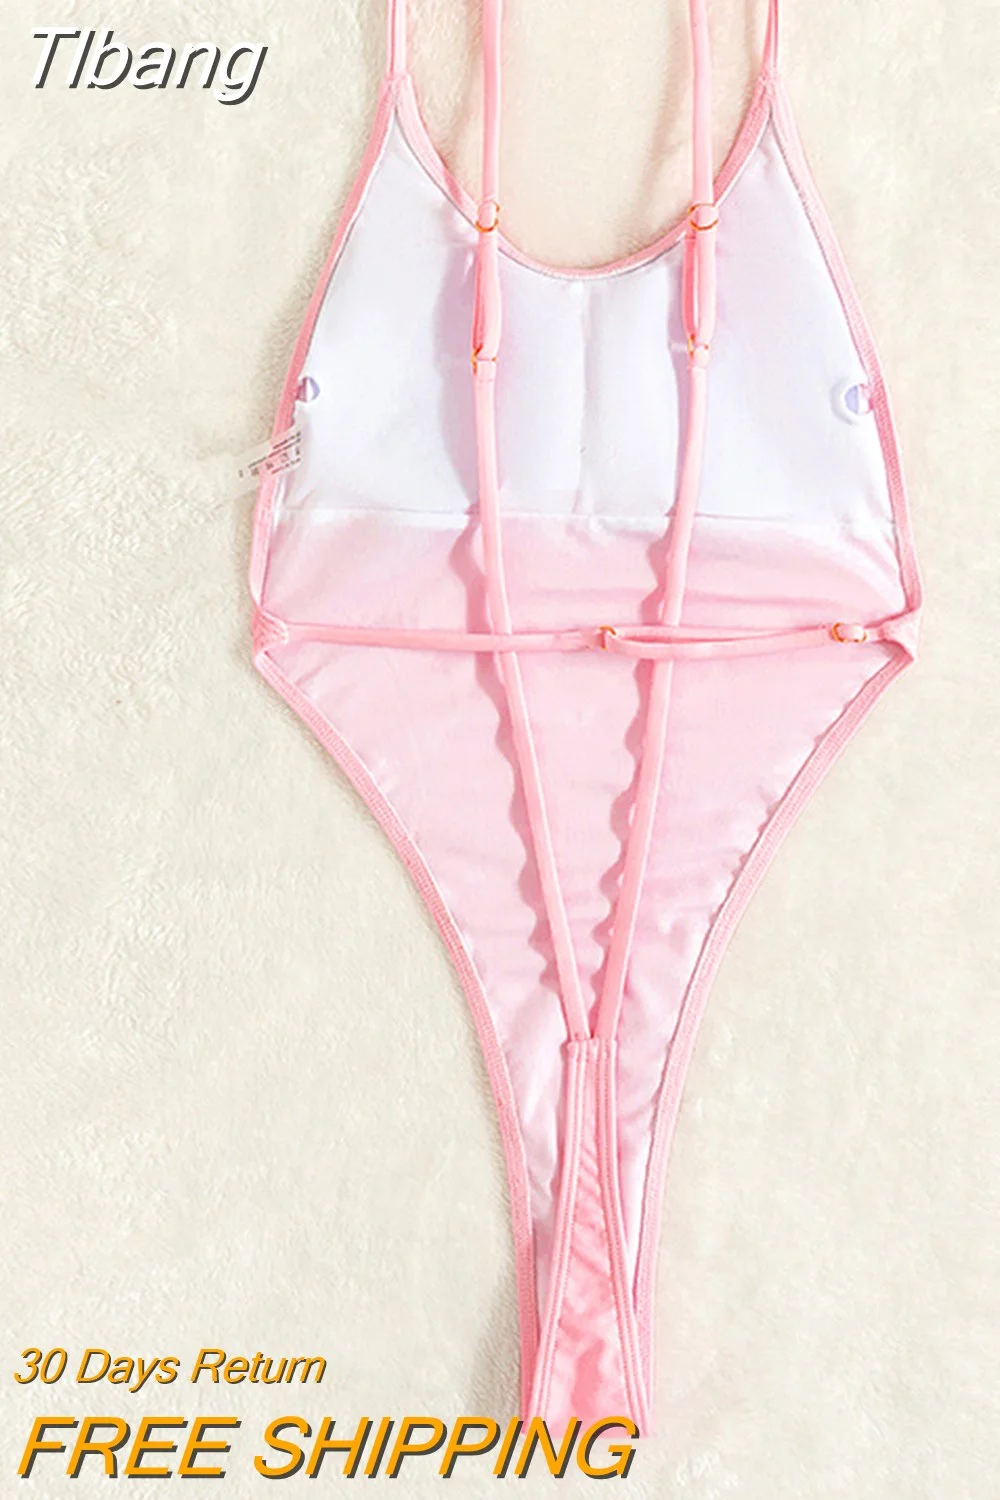 Tlbang Backless Thongs Swimsuit Sexy One Piece Monokini Brazilian Bathing Suit High Leg Bikinis Beachwear Light Pink Body 0410